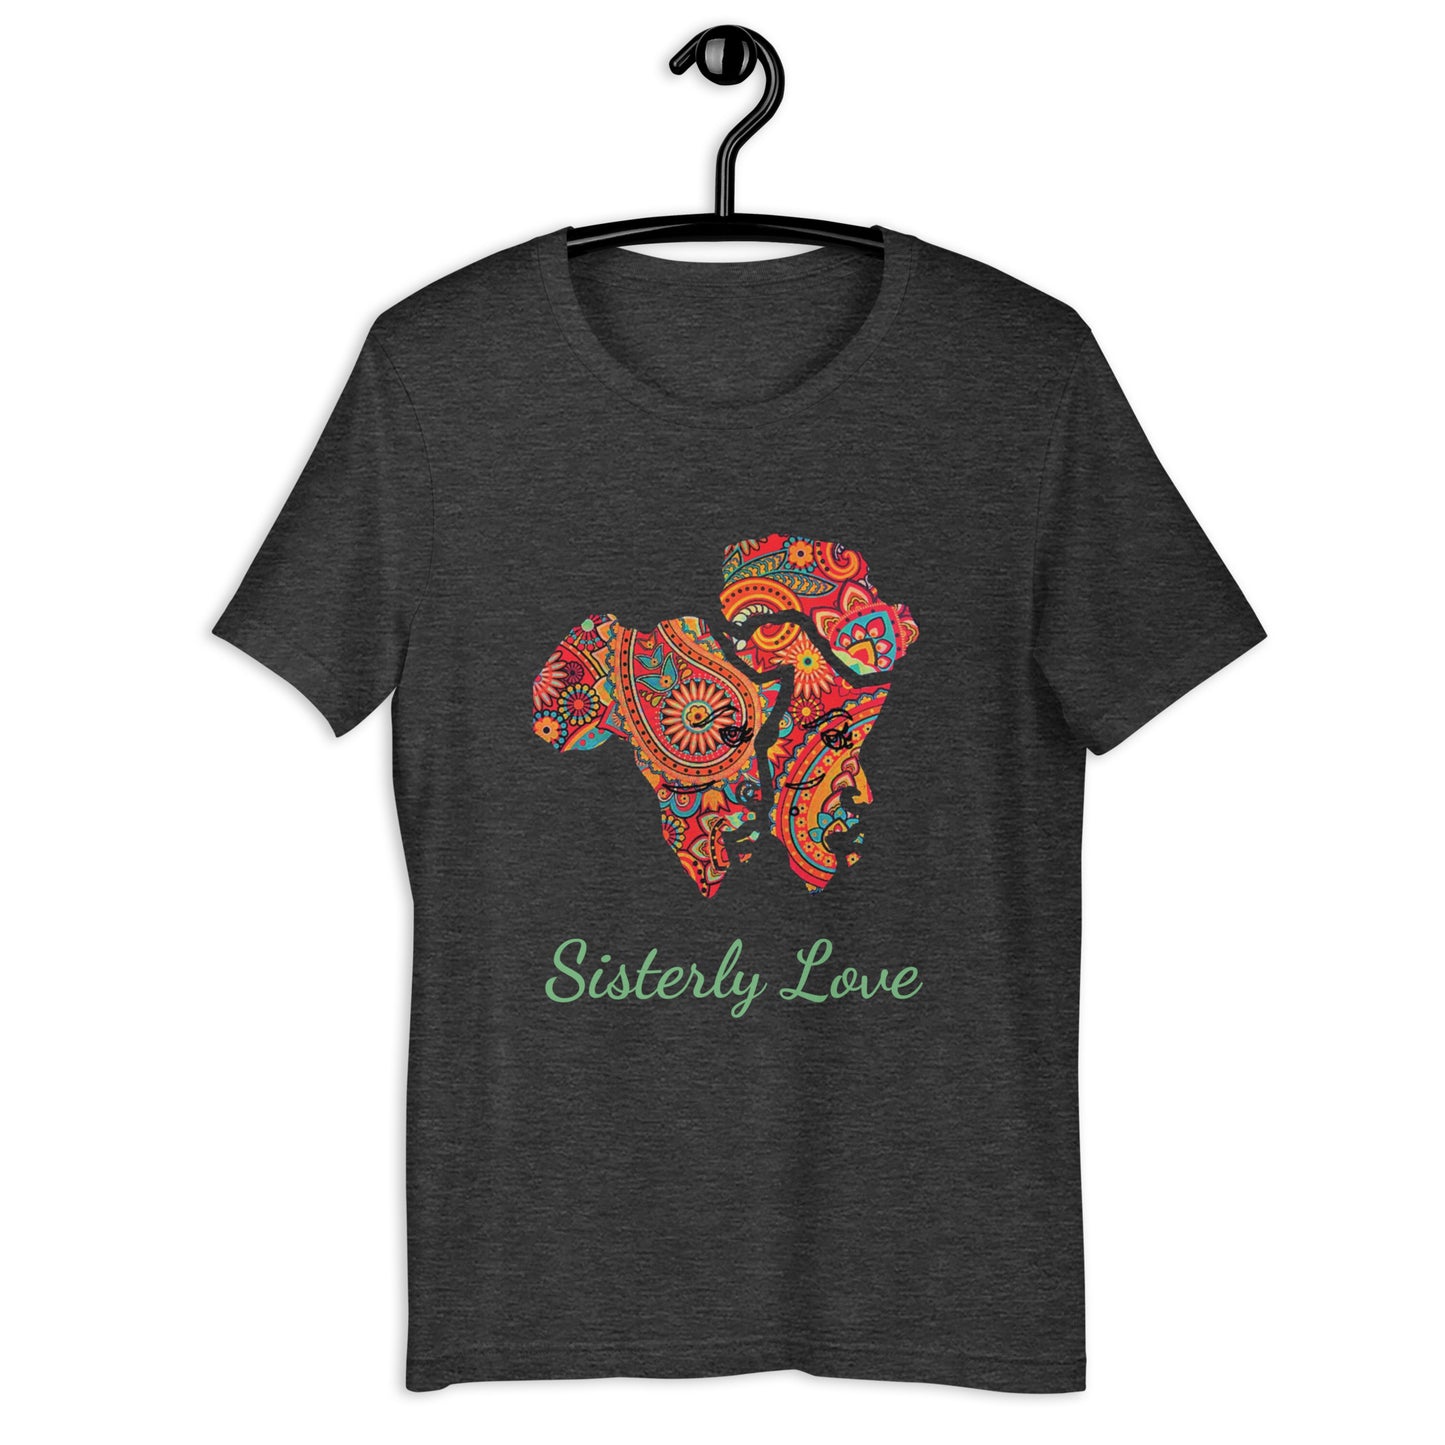 Unisex t-shirt (Sisterly Love)